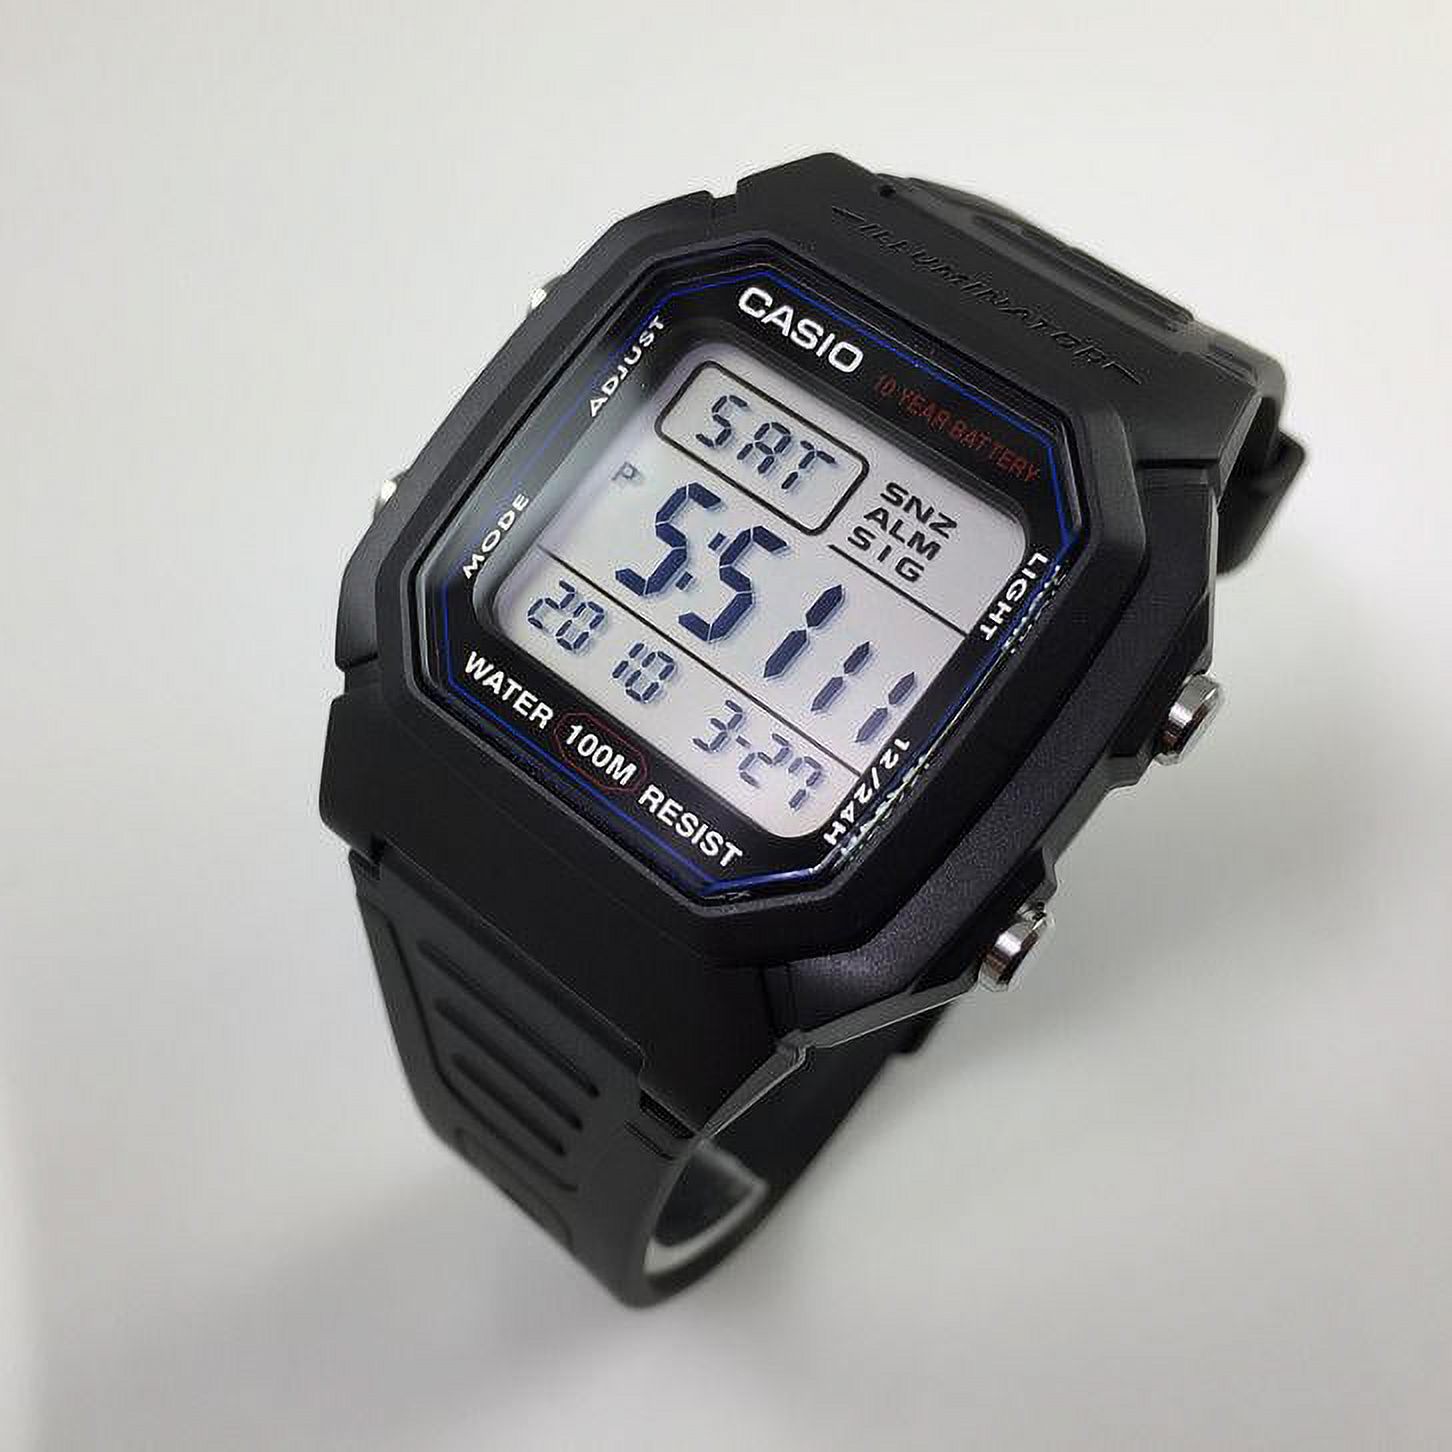 Casio Men's Classic Digital Sport Watch W800H-1AV - image 2 of 5